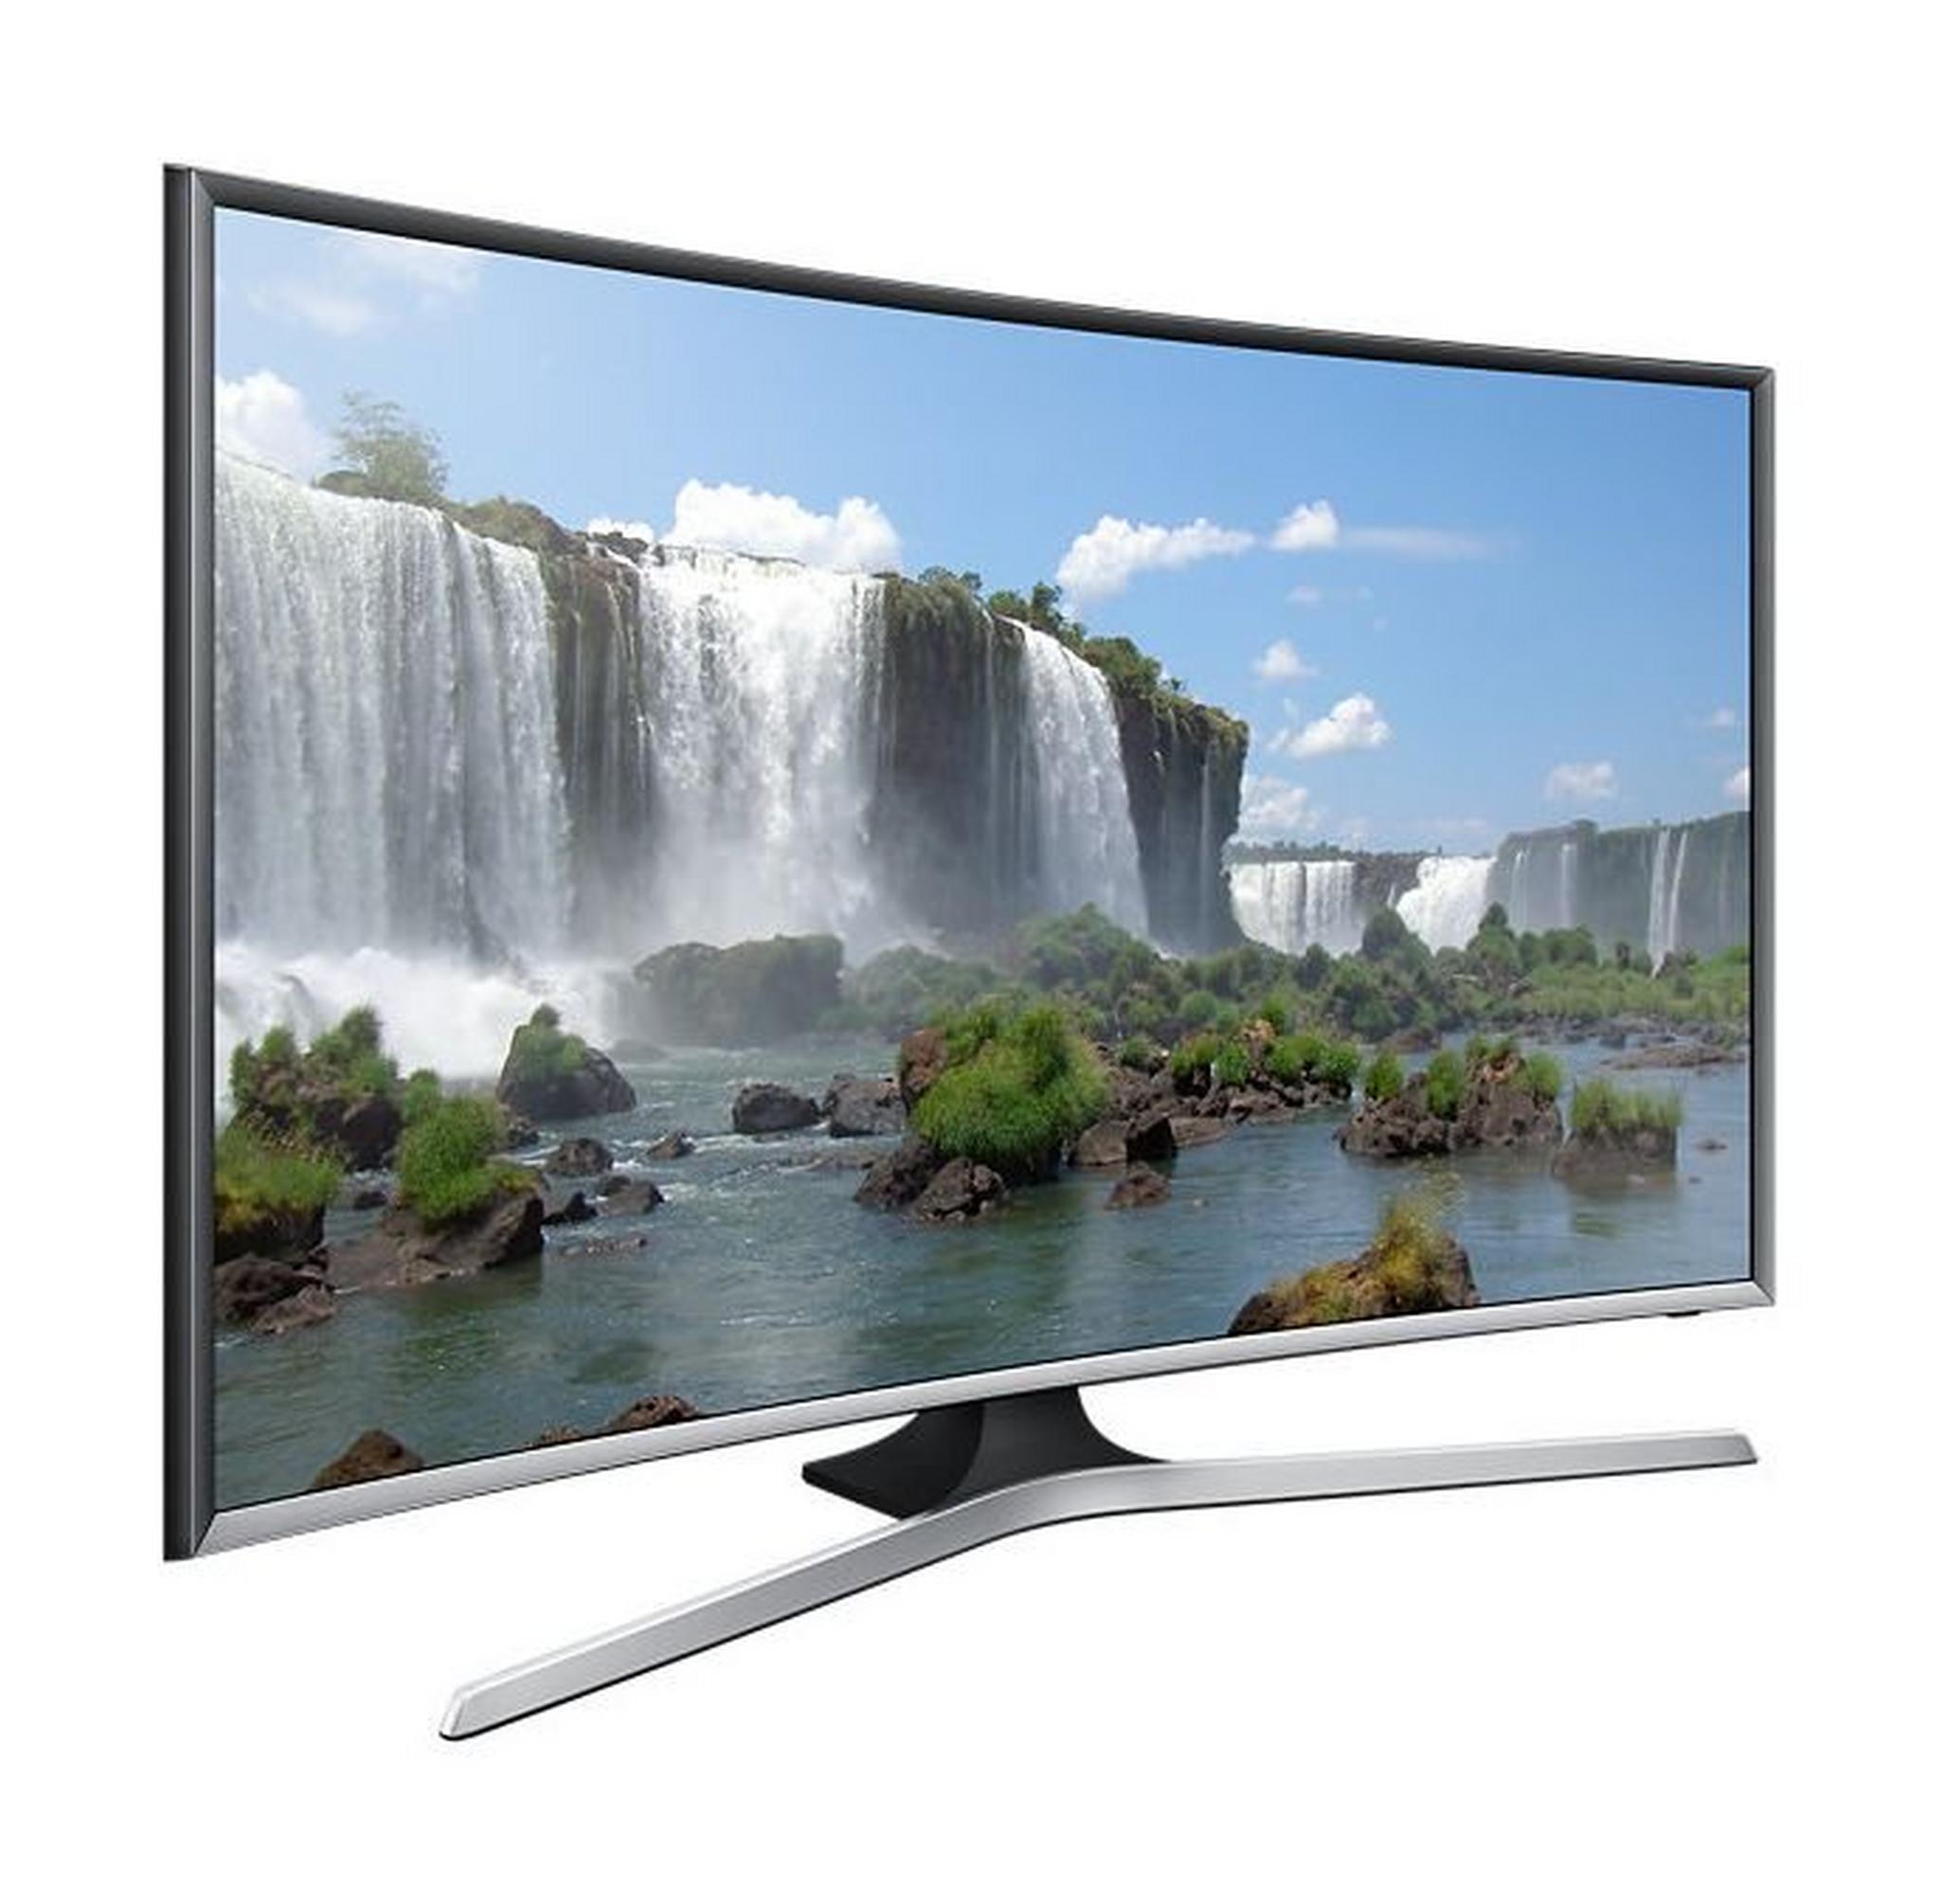 Use Code SAMTVMAR16: Samsung 55-inch Smart Curved Full HD (1080p) LED TV - UA55J6300A